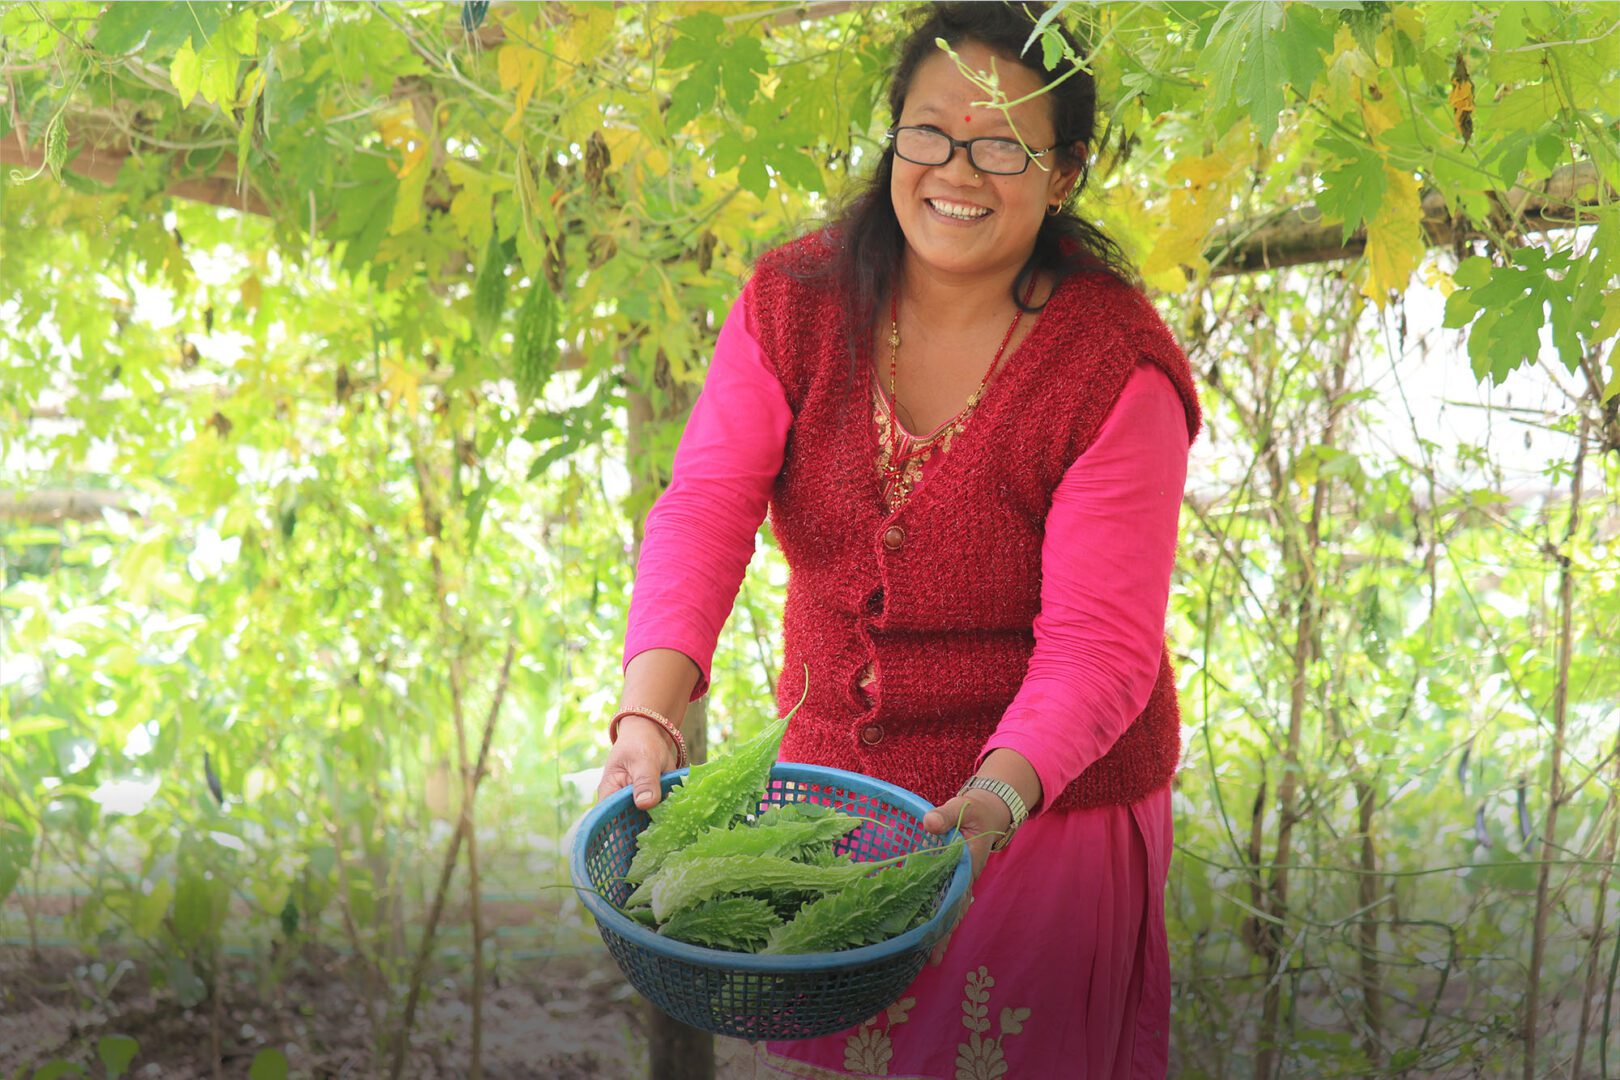 Village farmer in Nepal shows her harvest.